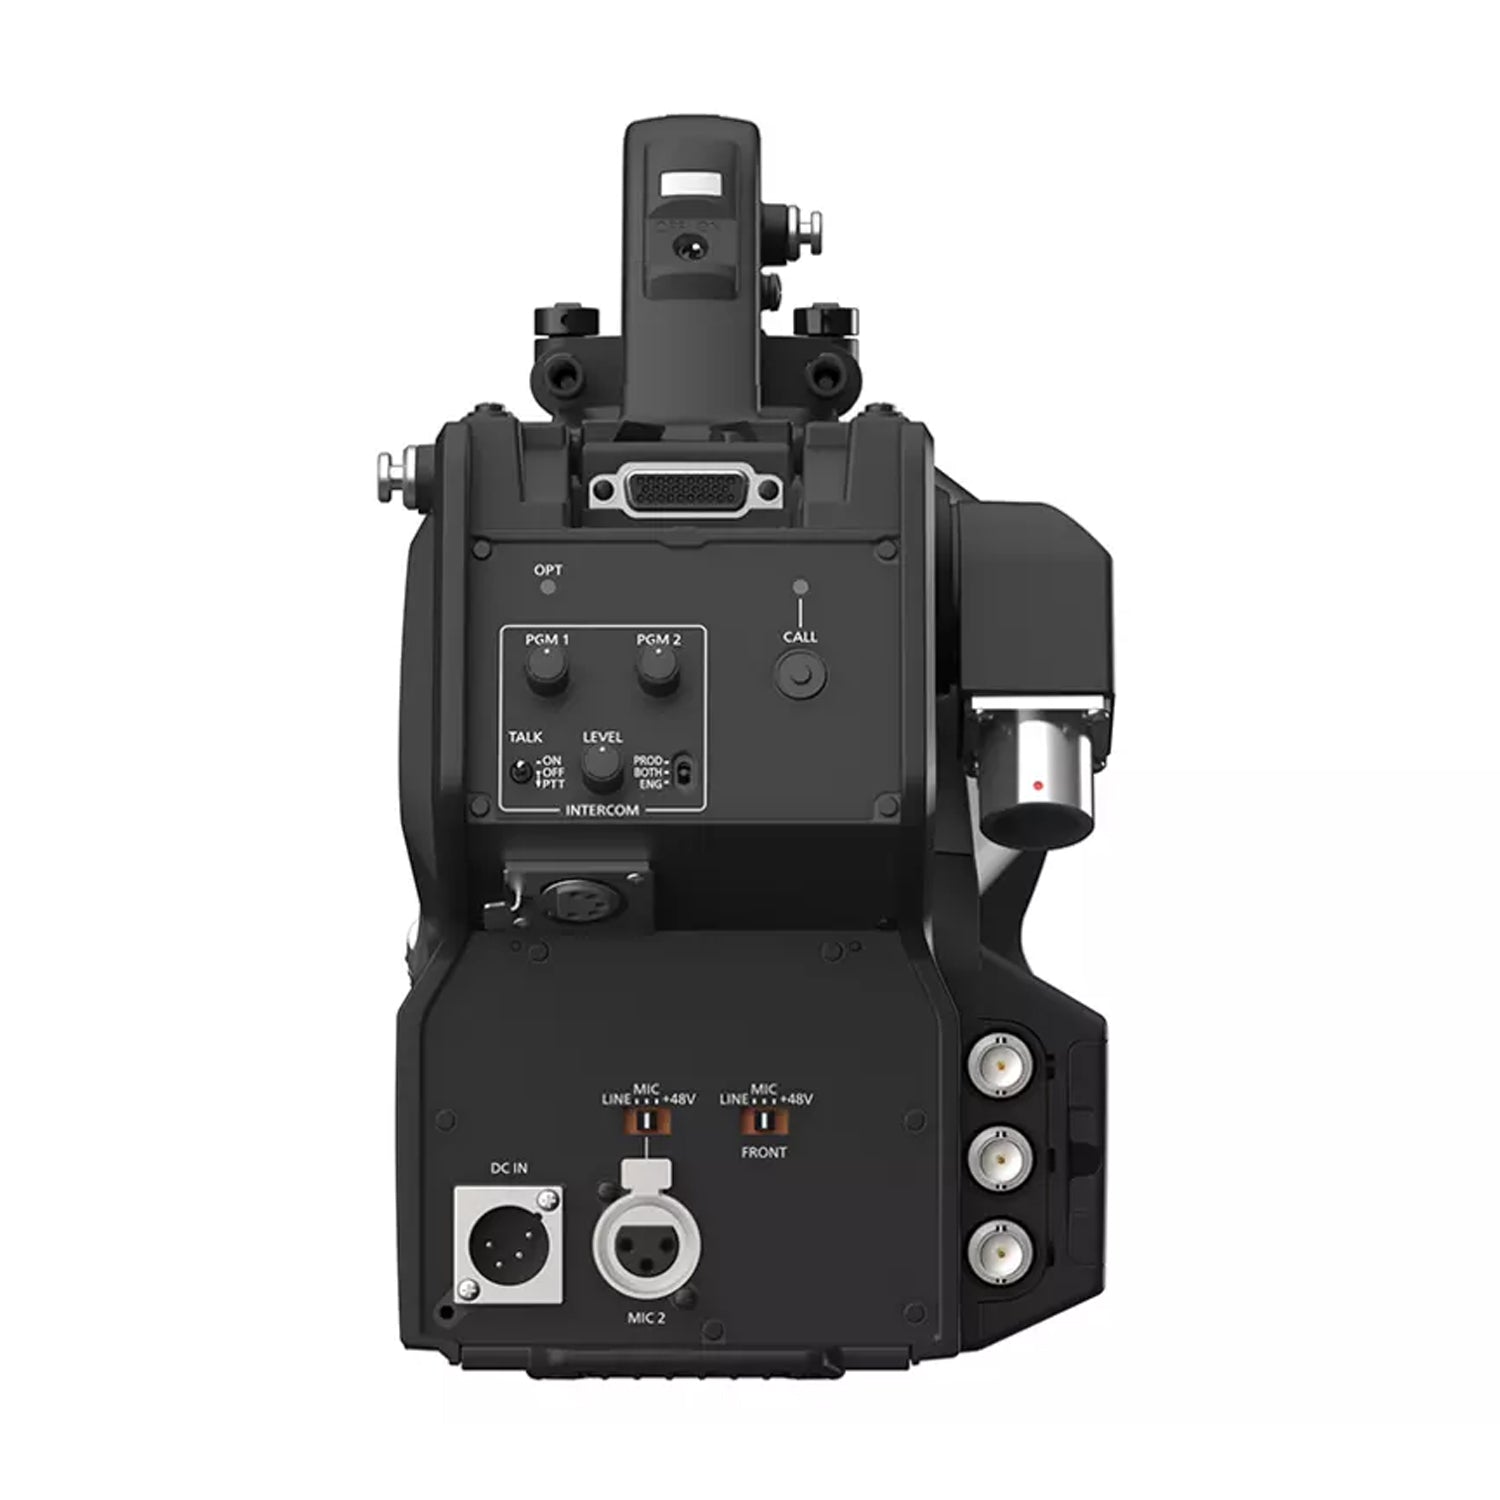 Panasonic AK-PLV100 4K Studio Camera